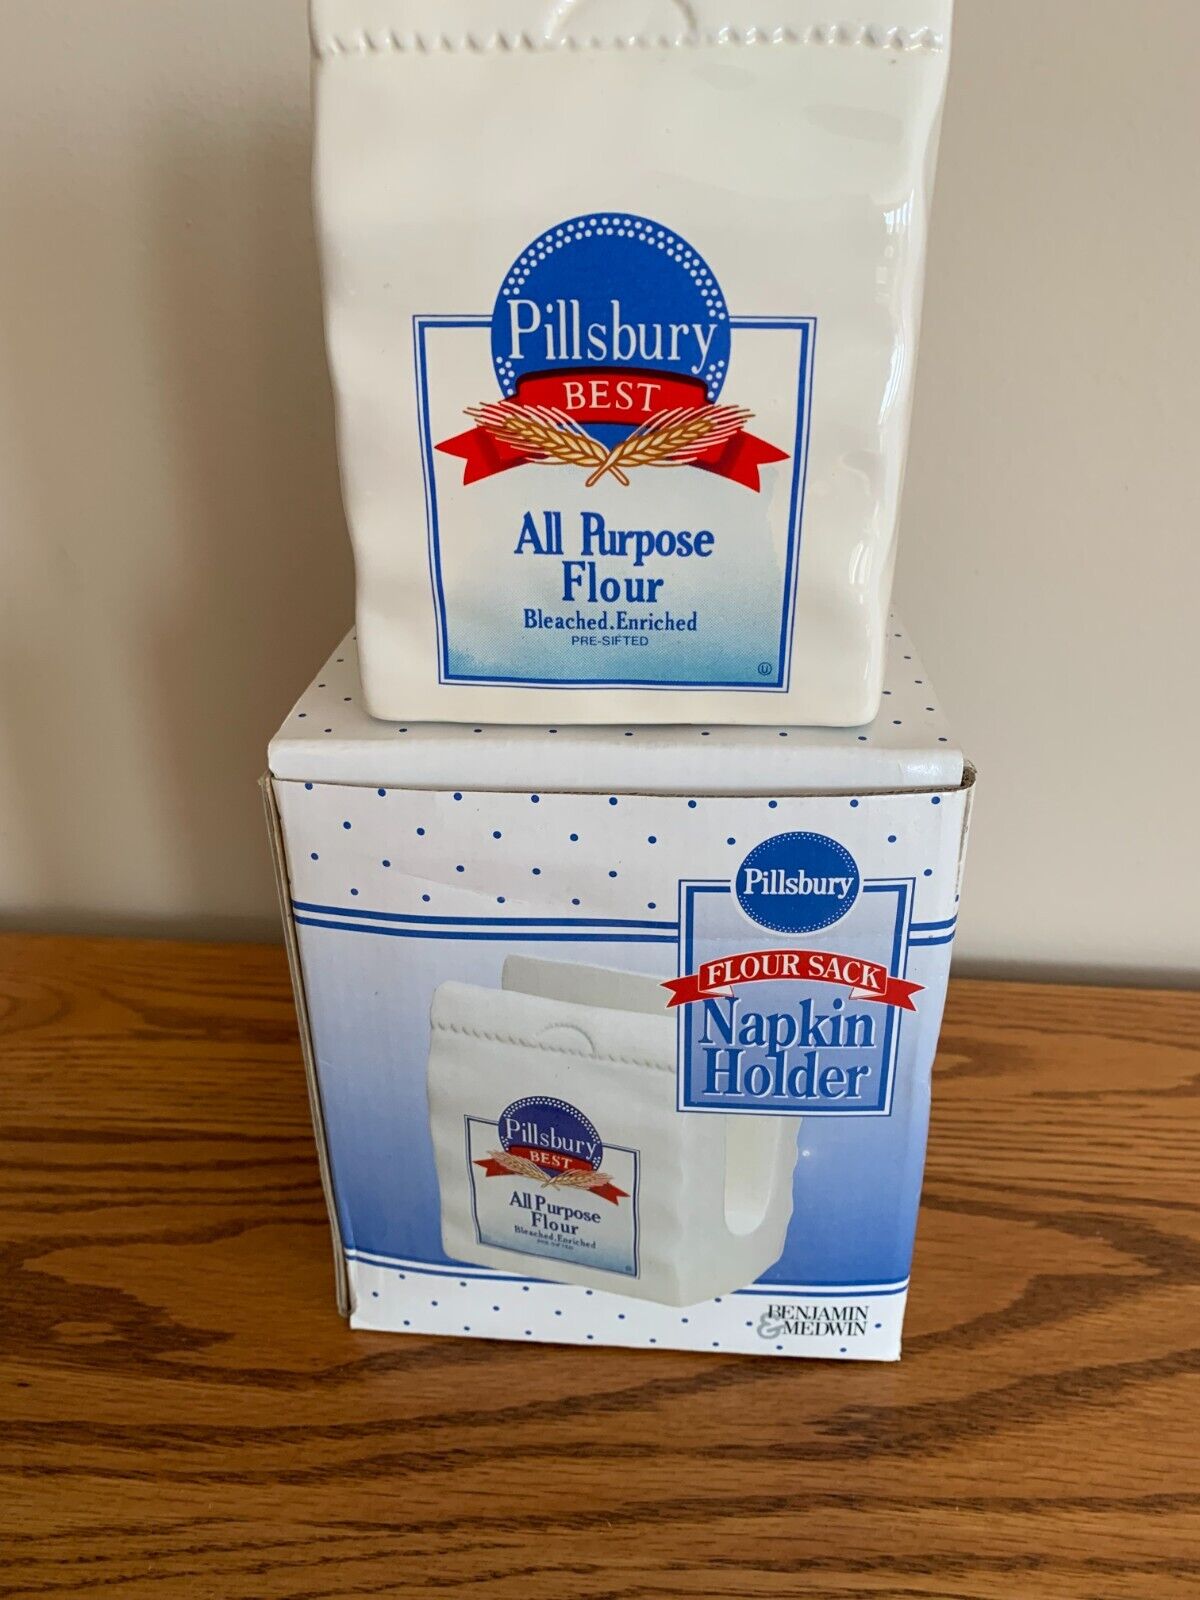 Pillsbury Best All Purpose Flour Sack Napkin Holder in Original Box